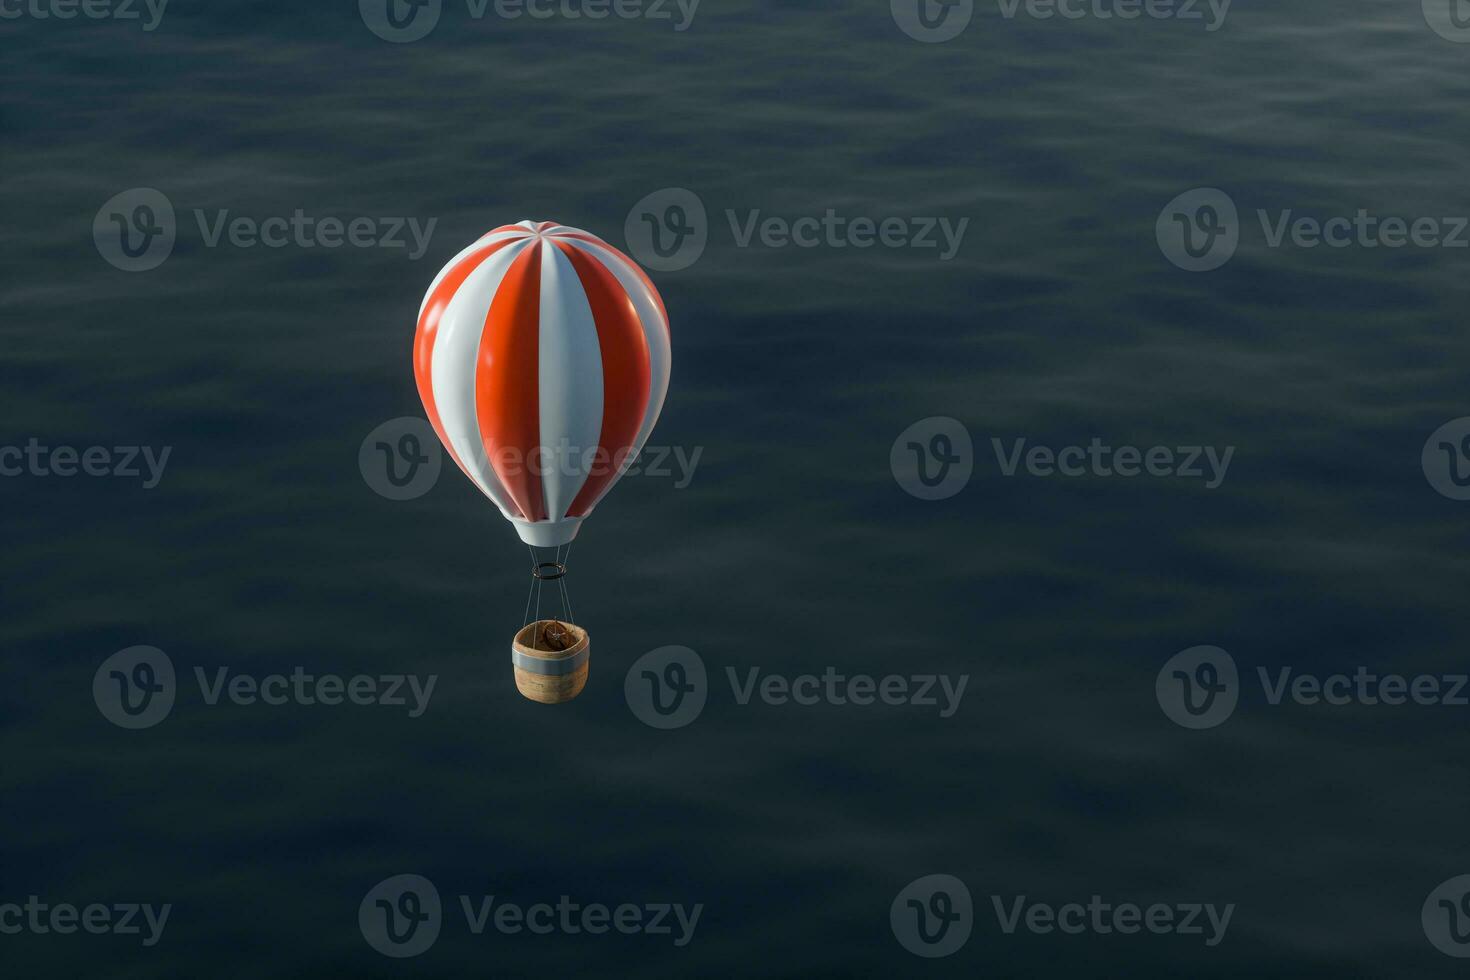 heet lucht ballon vliegend over- de oceaan, 3d weergave. foto